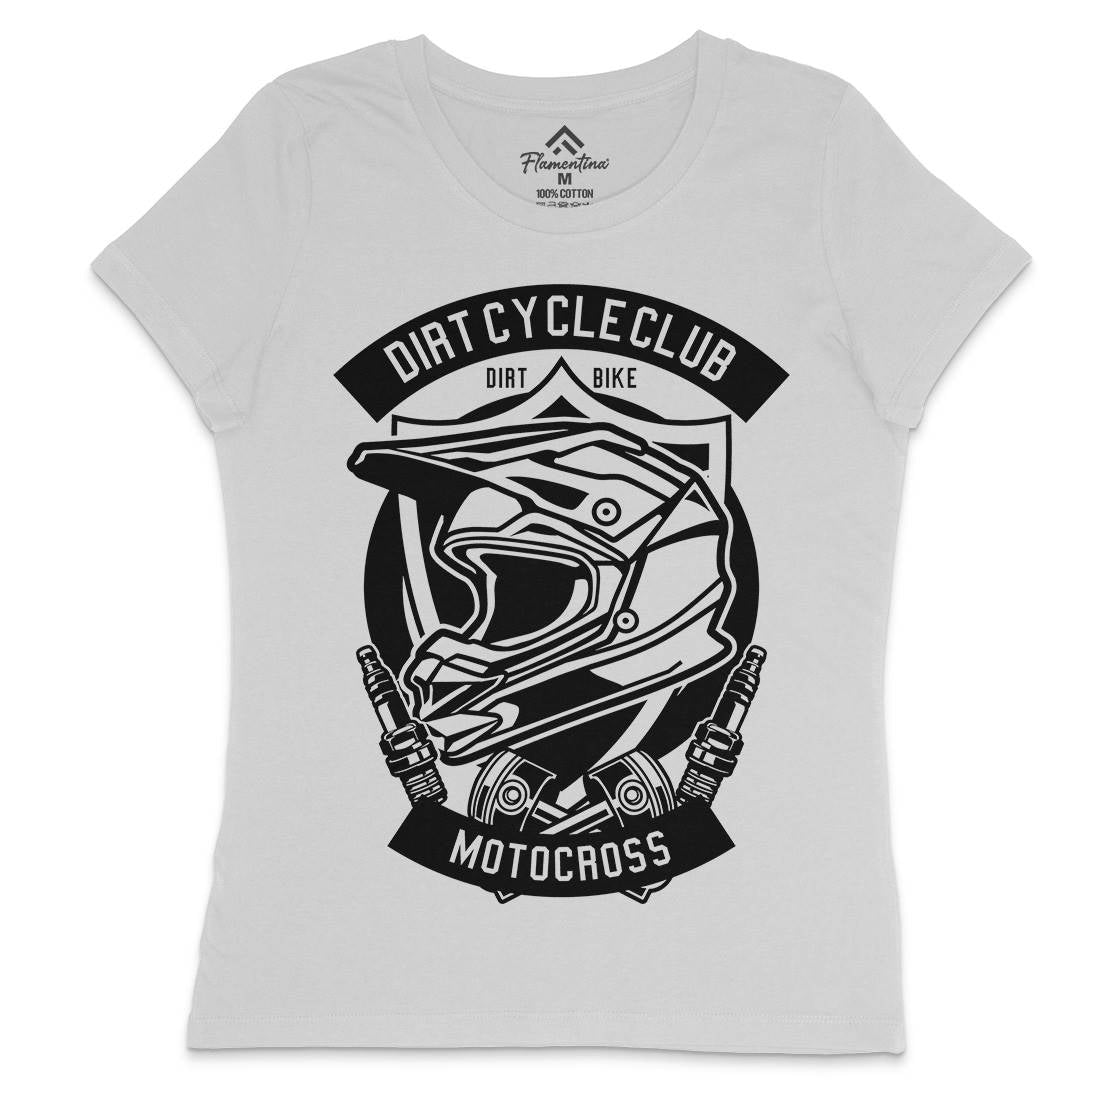 Dirty Cycle Club Womens Crew Neck T-Shirt Motorcycles B532